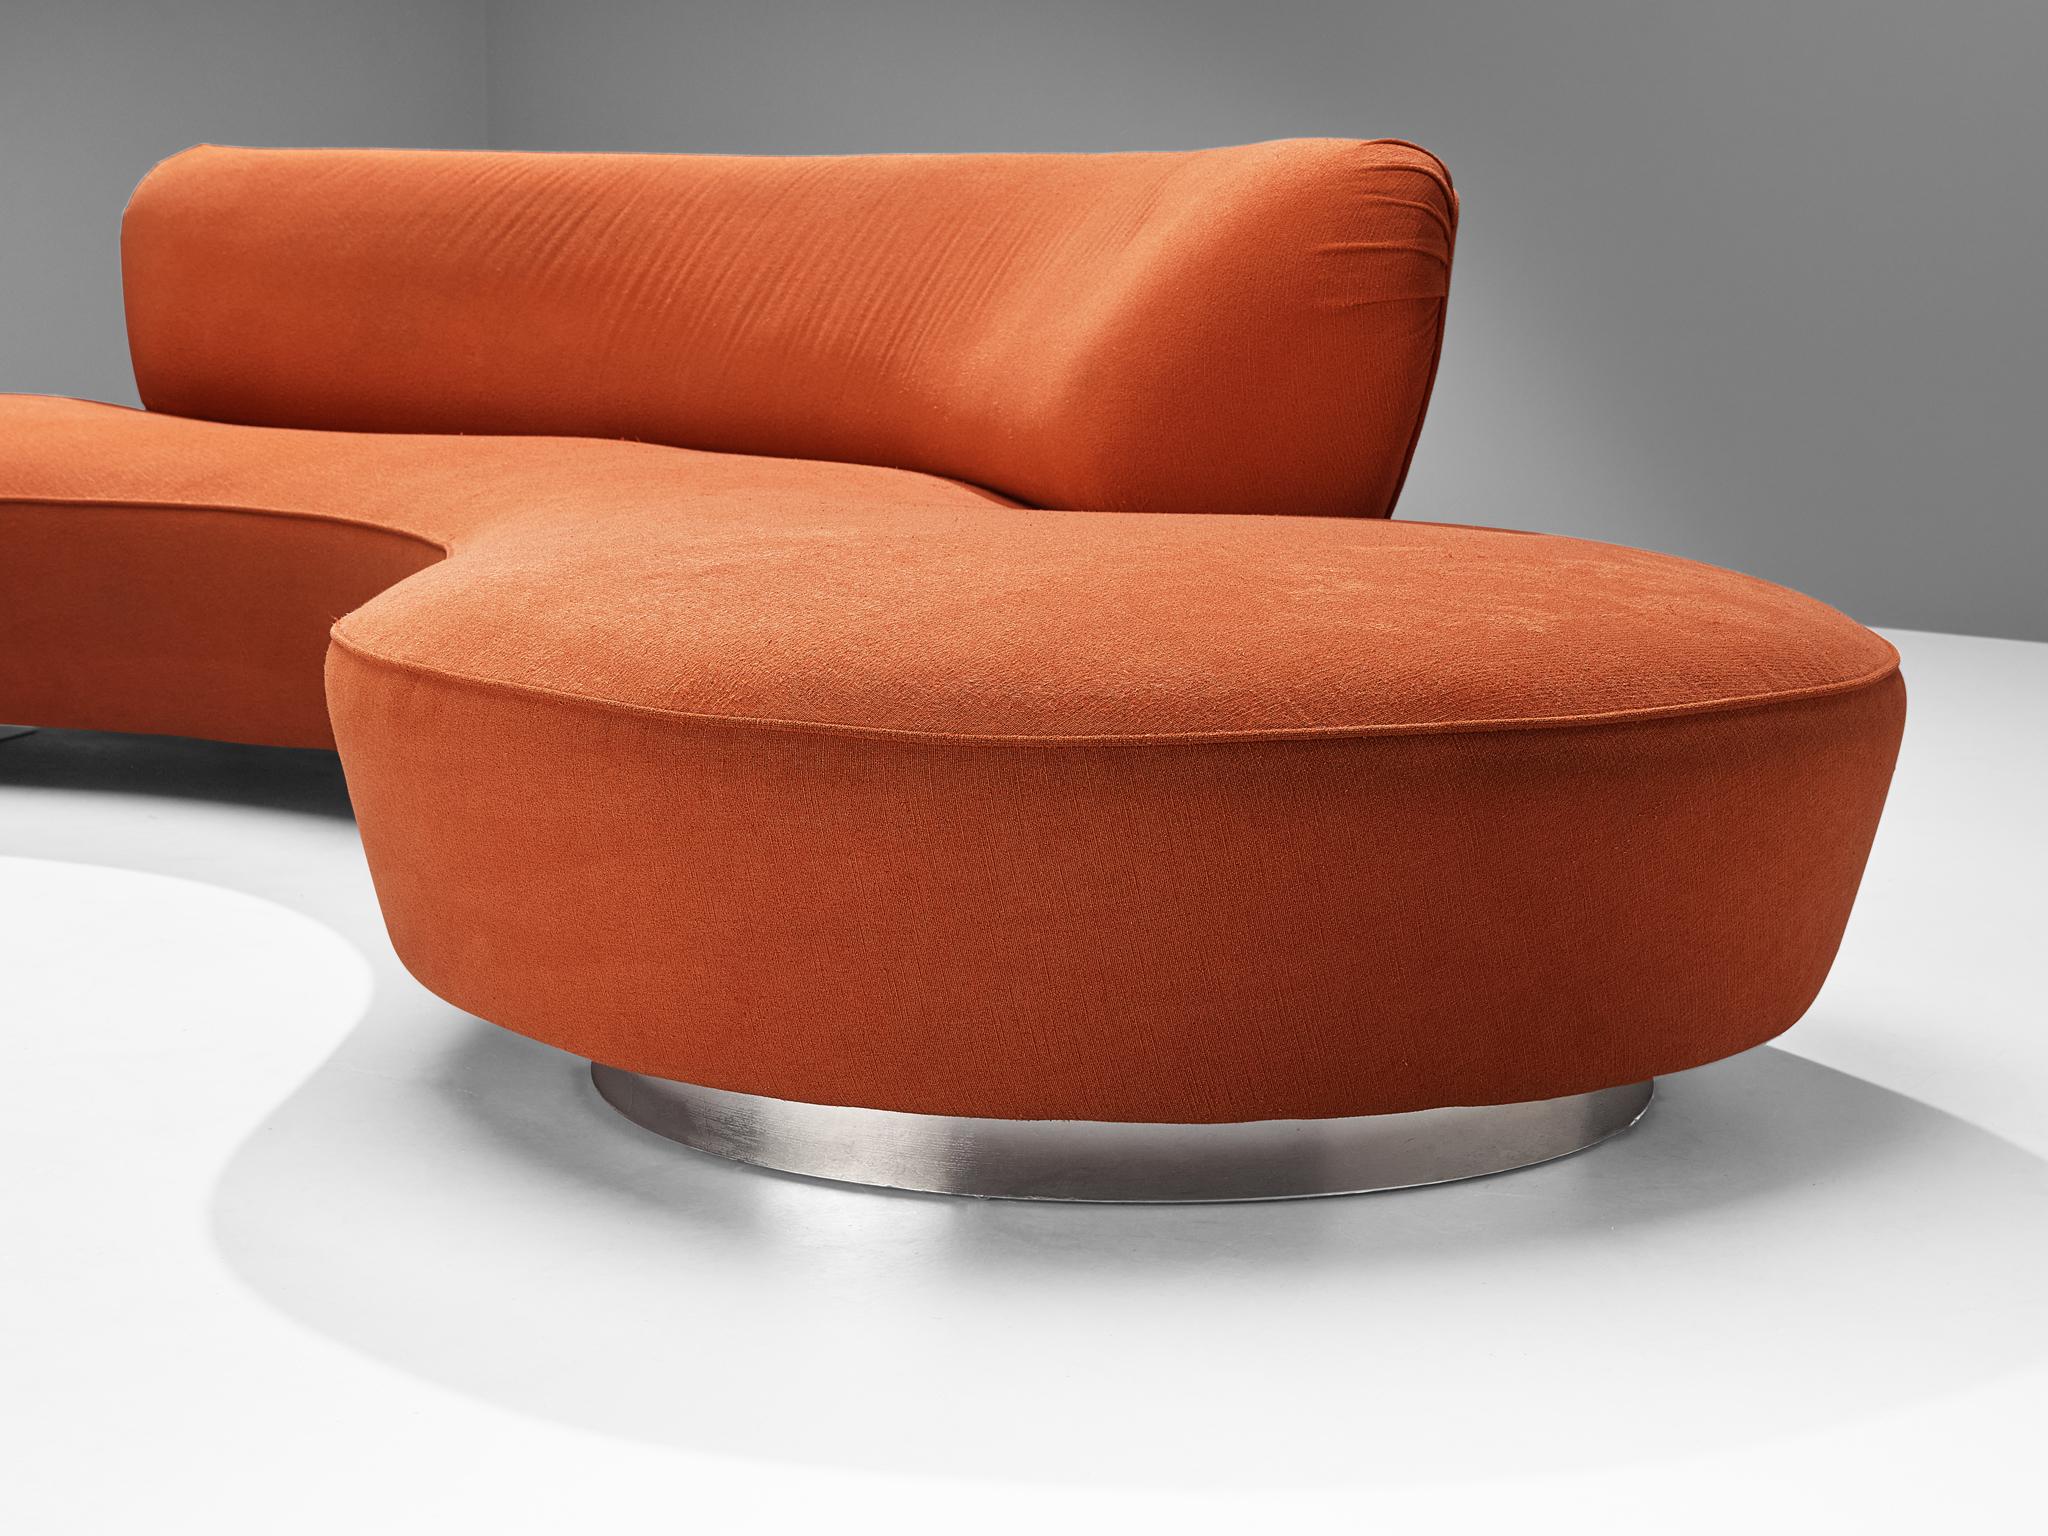 Iconic Vladimir Kagan ‘Serpentine’ Sofa with Ottoman in Red Orange Fabric 1